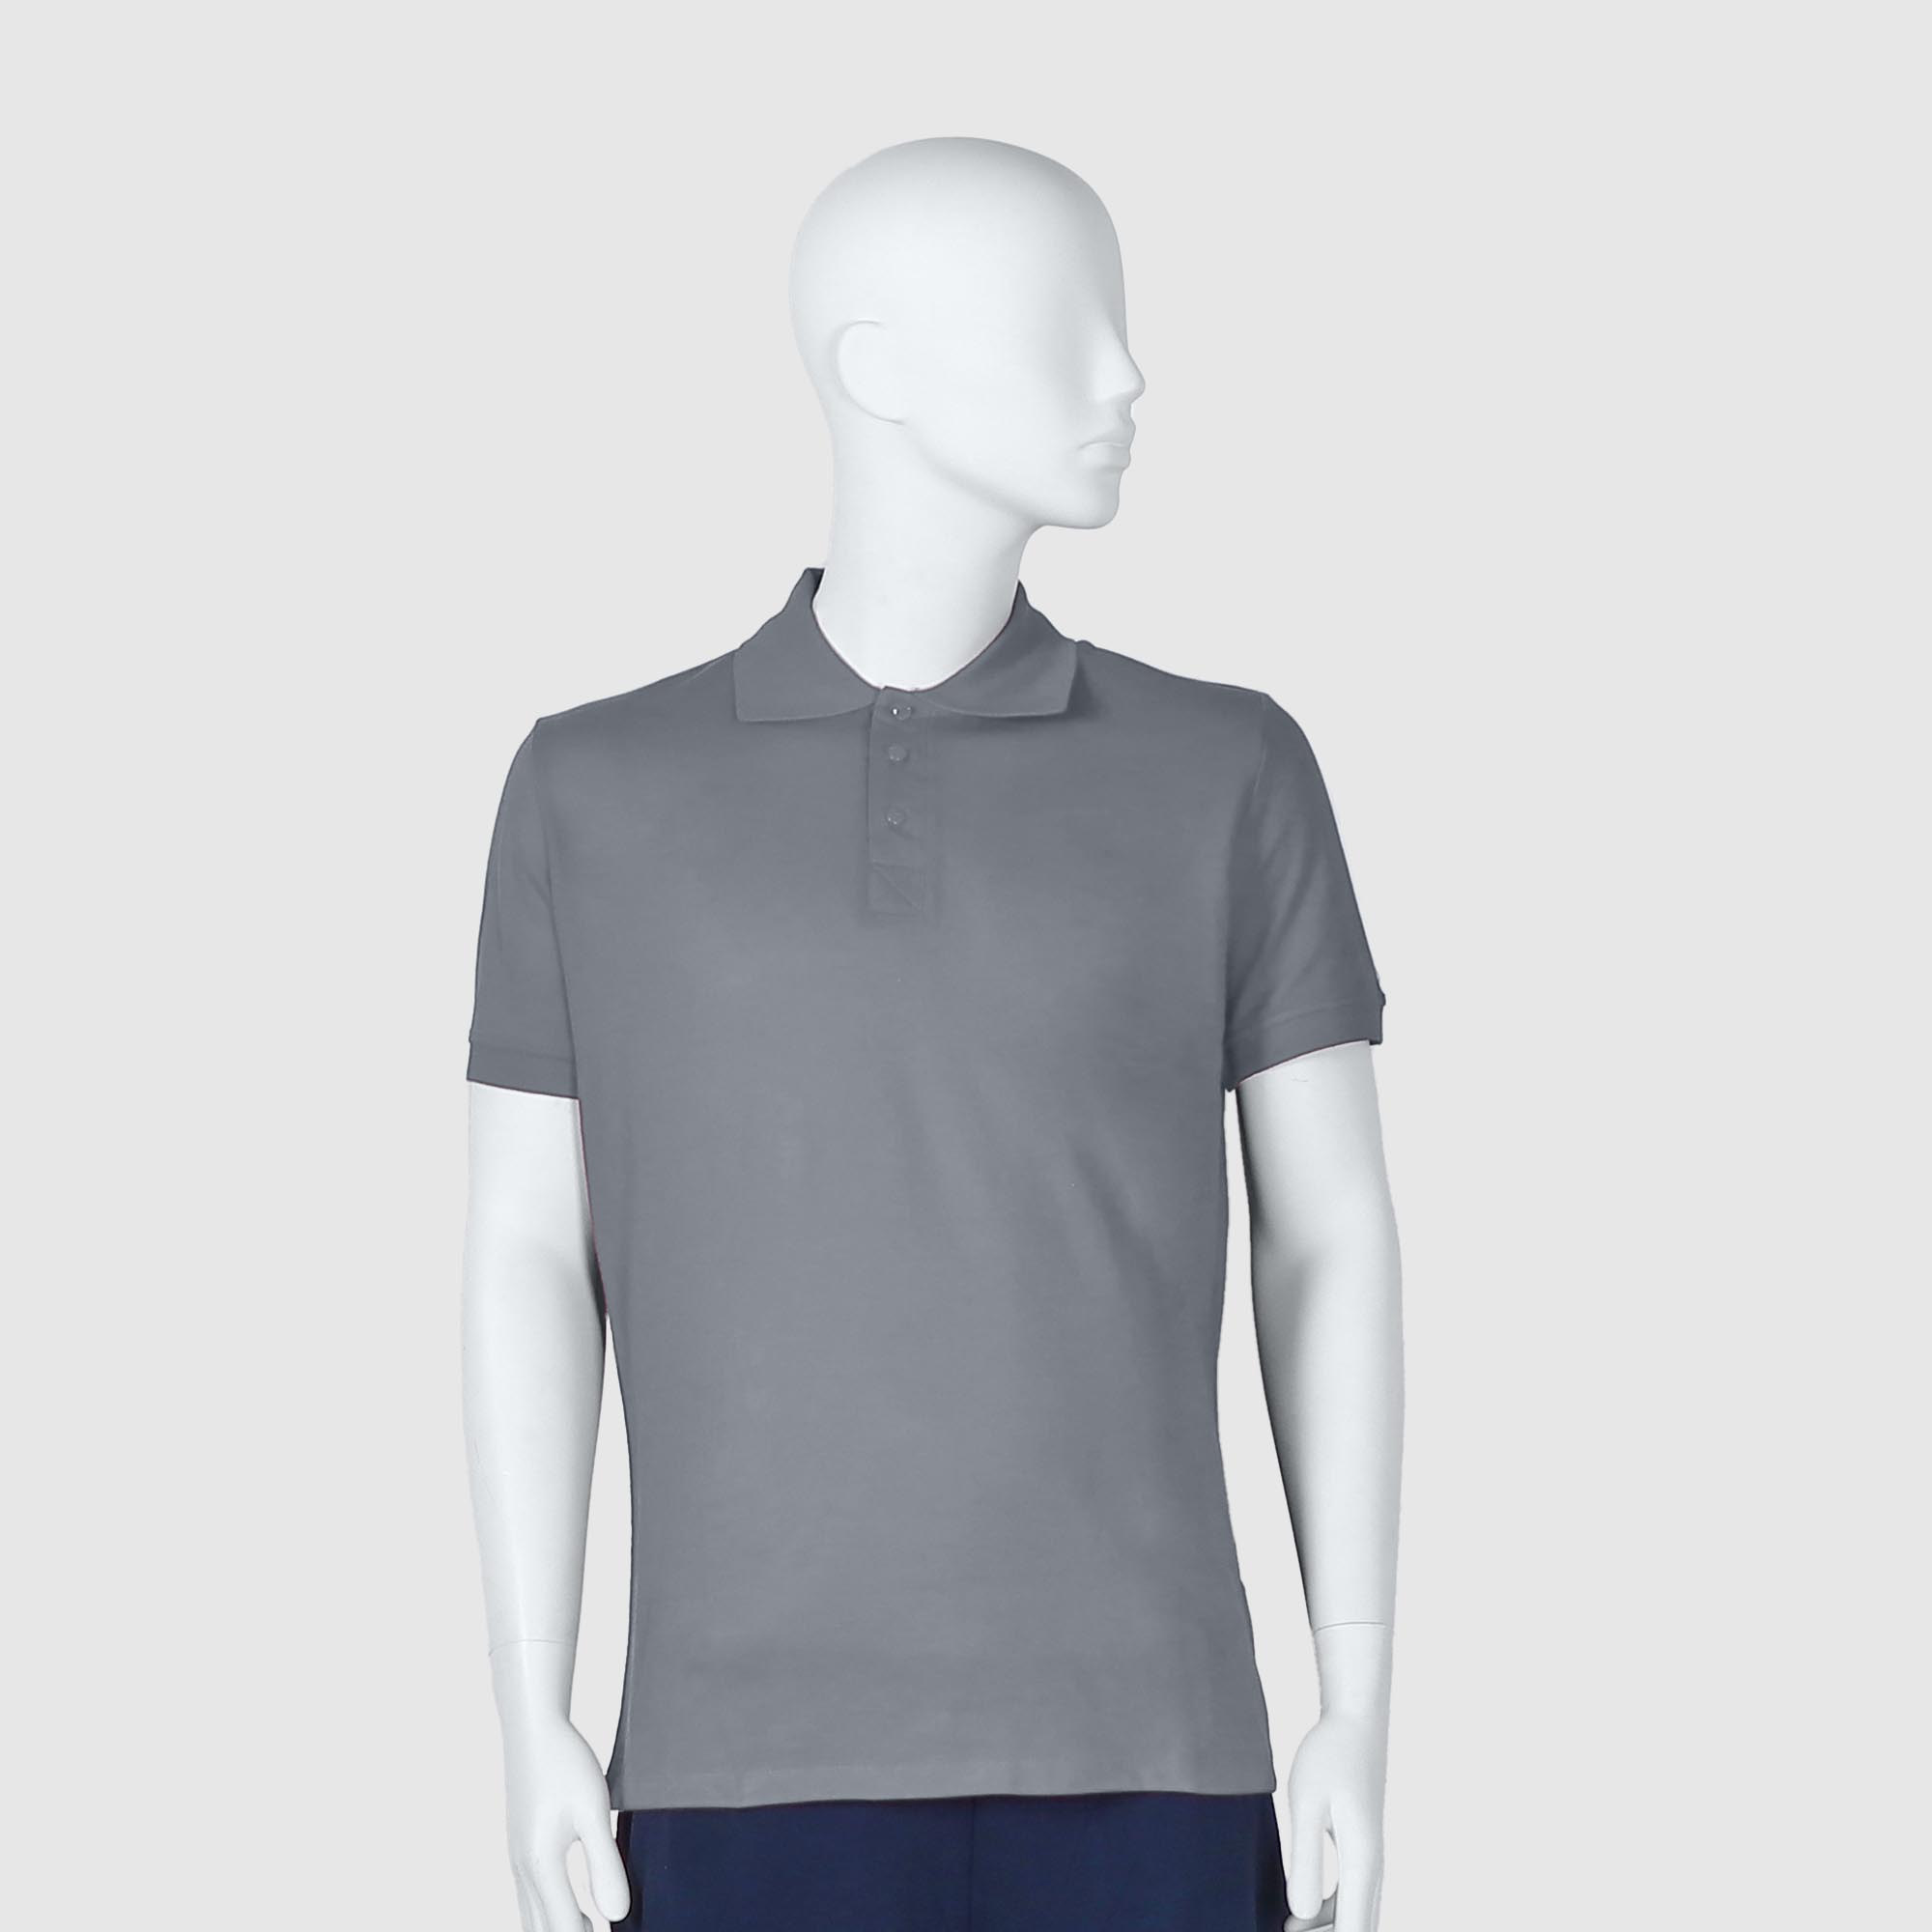 Мужская футболка-поло Diva Teks серая (DTD-11), цвет серый, размер 44-46